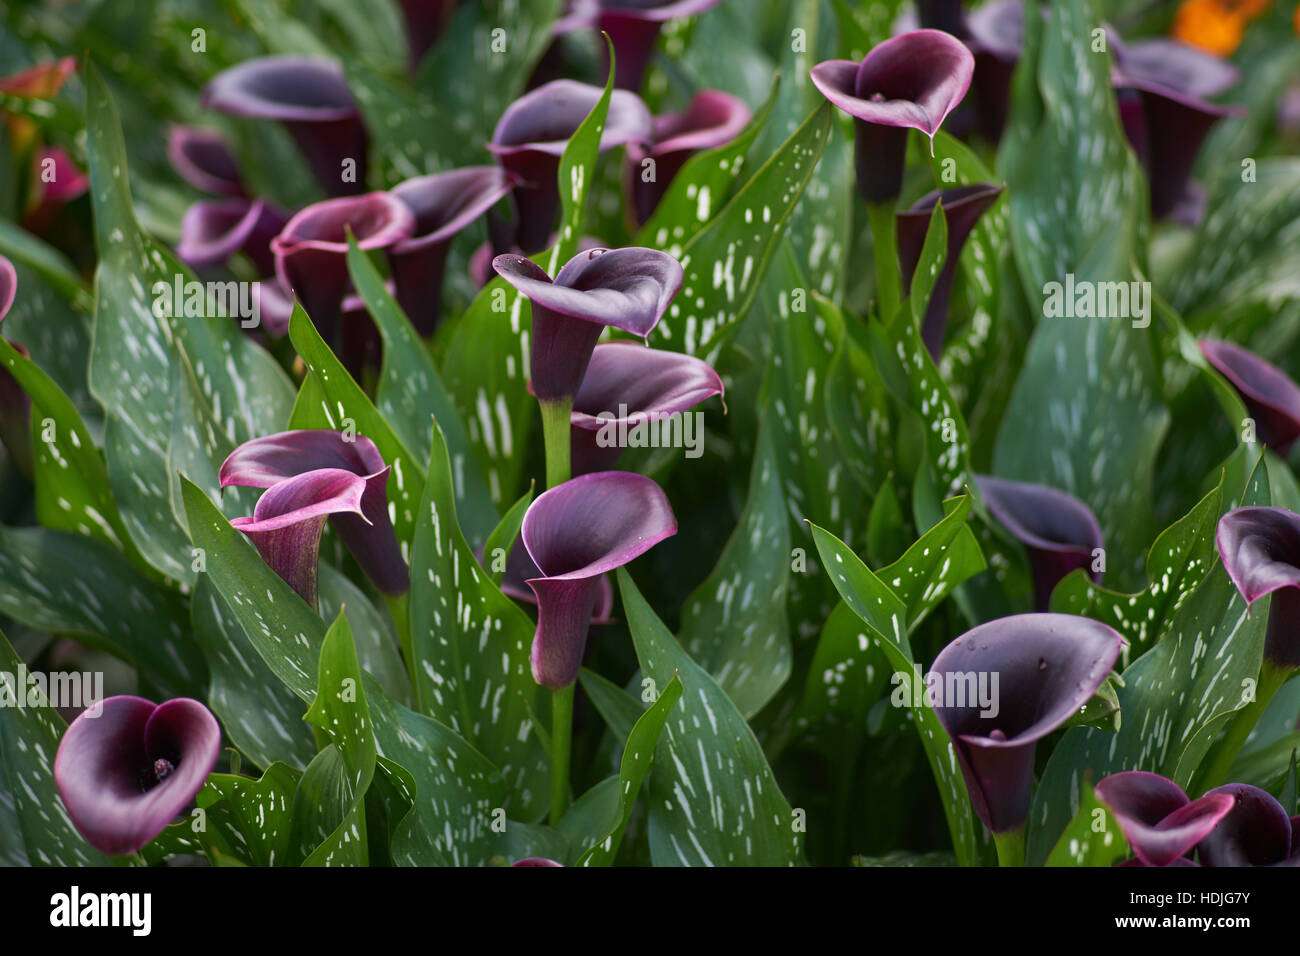 Black Zantedeschia flowers in full bloom Stock Photo - Alamy